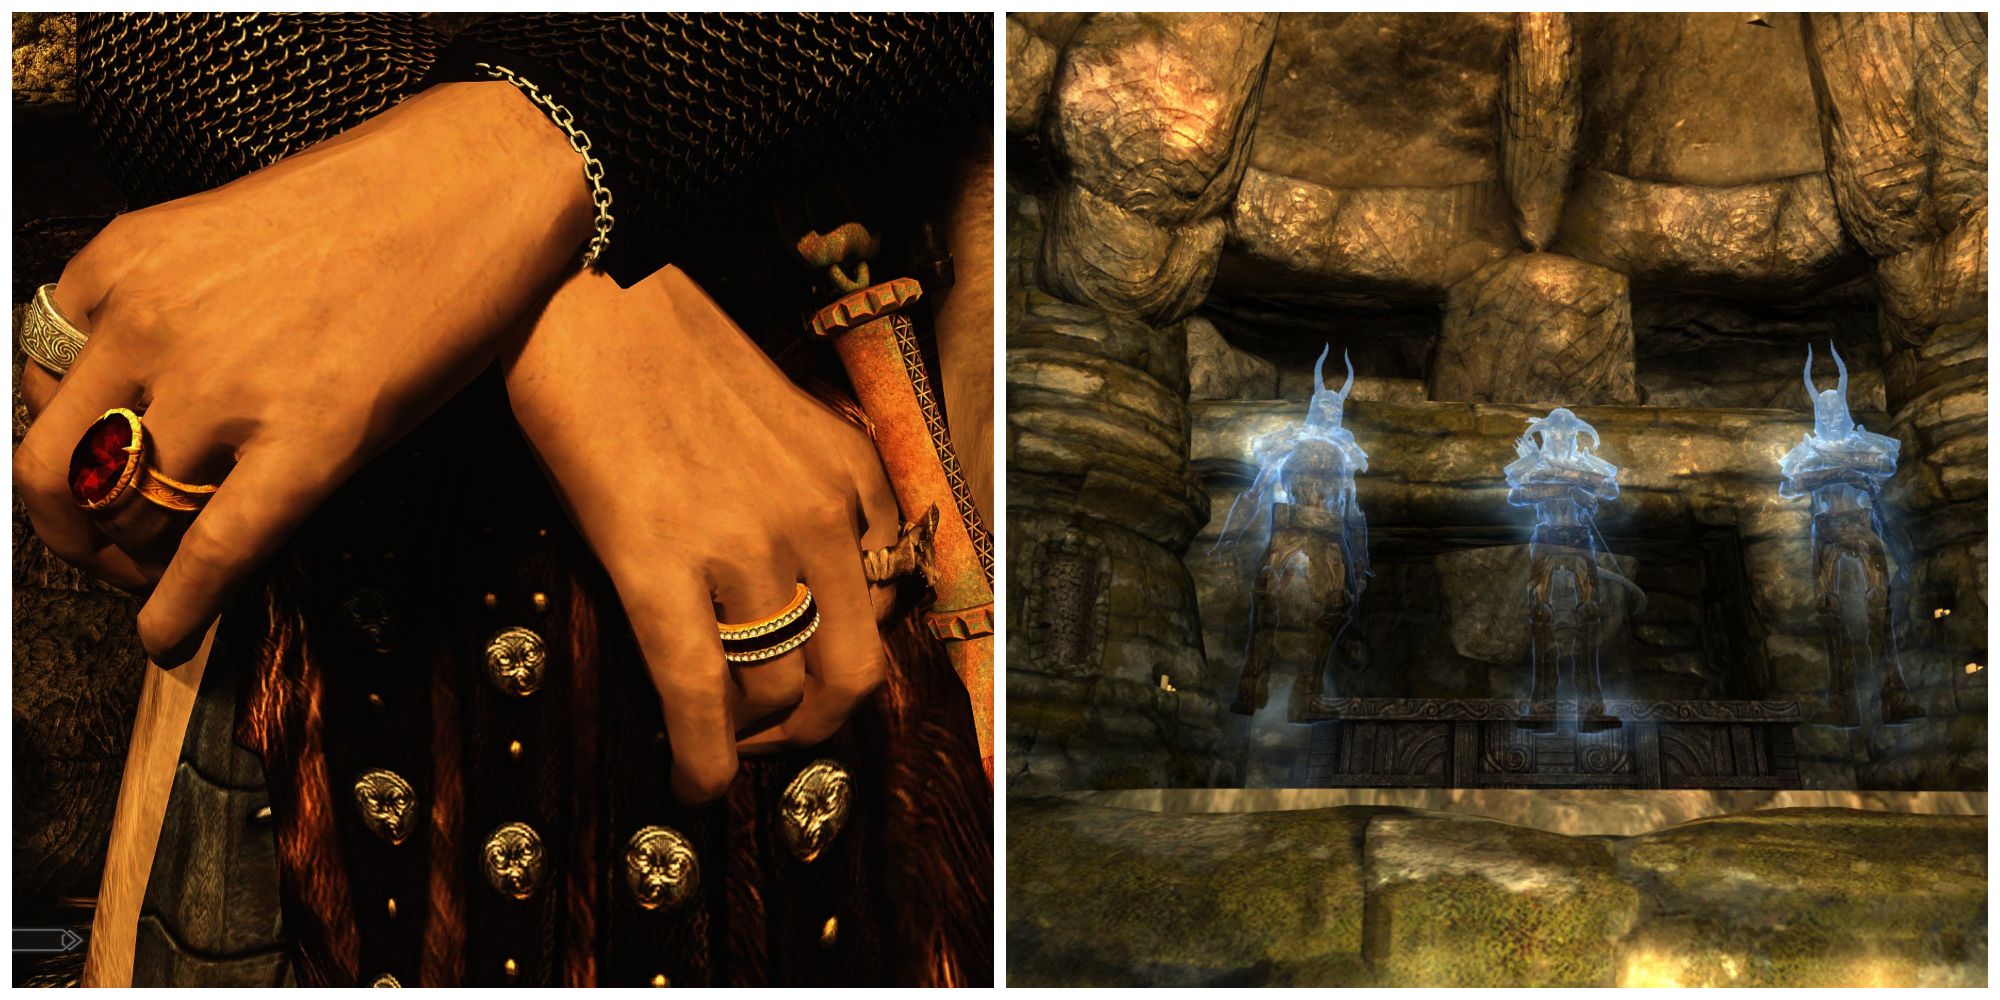 Skyrim split image, hands wearing rings and the Gauldur brothers' ghosts.